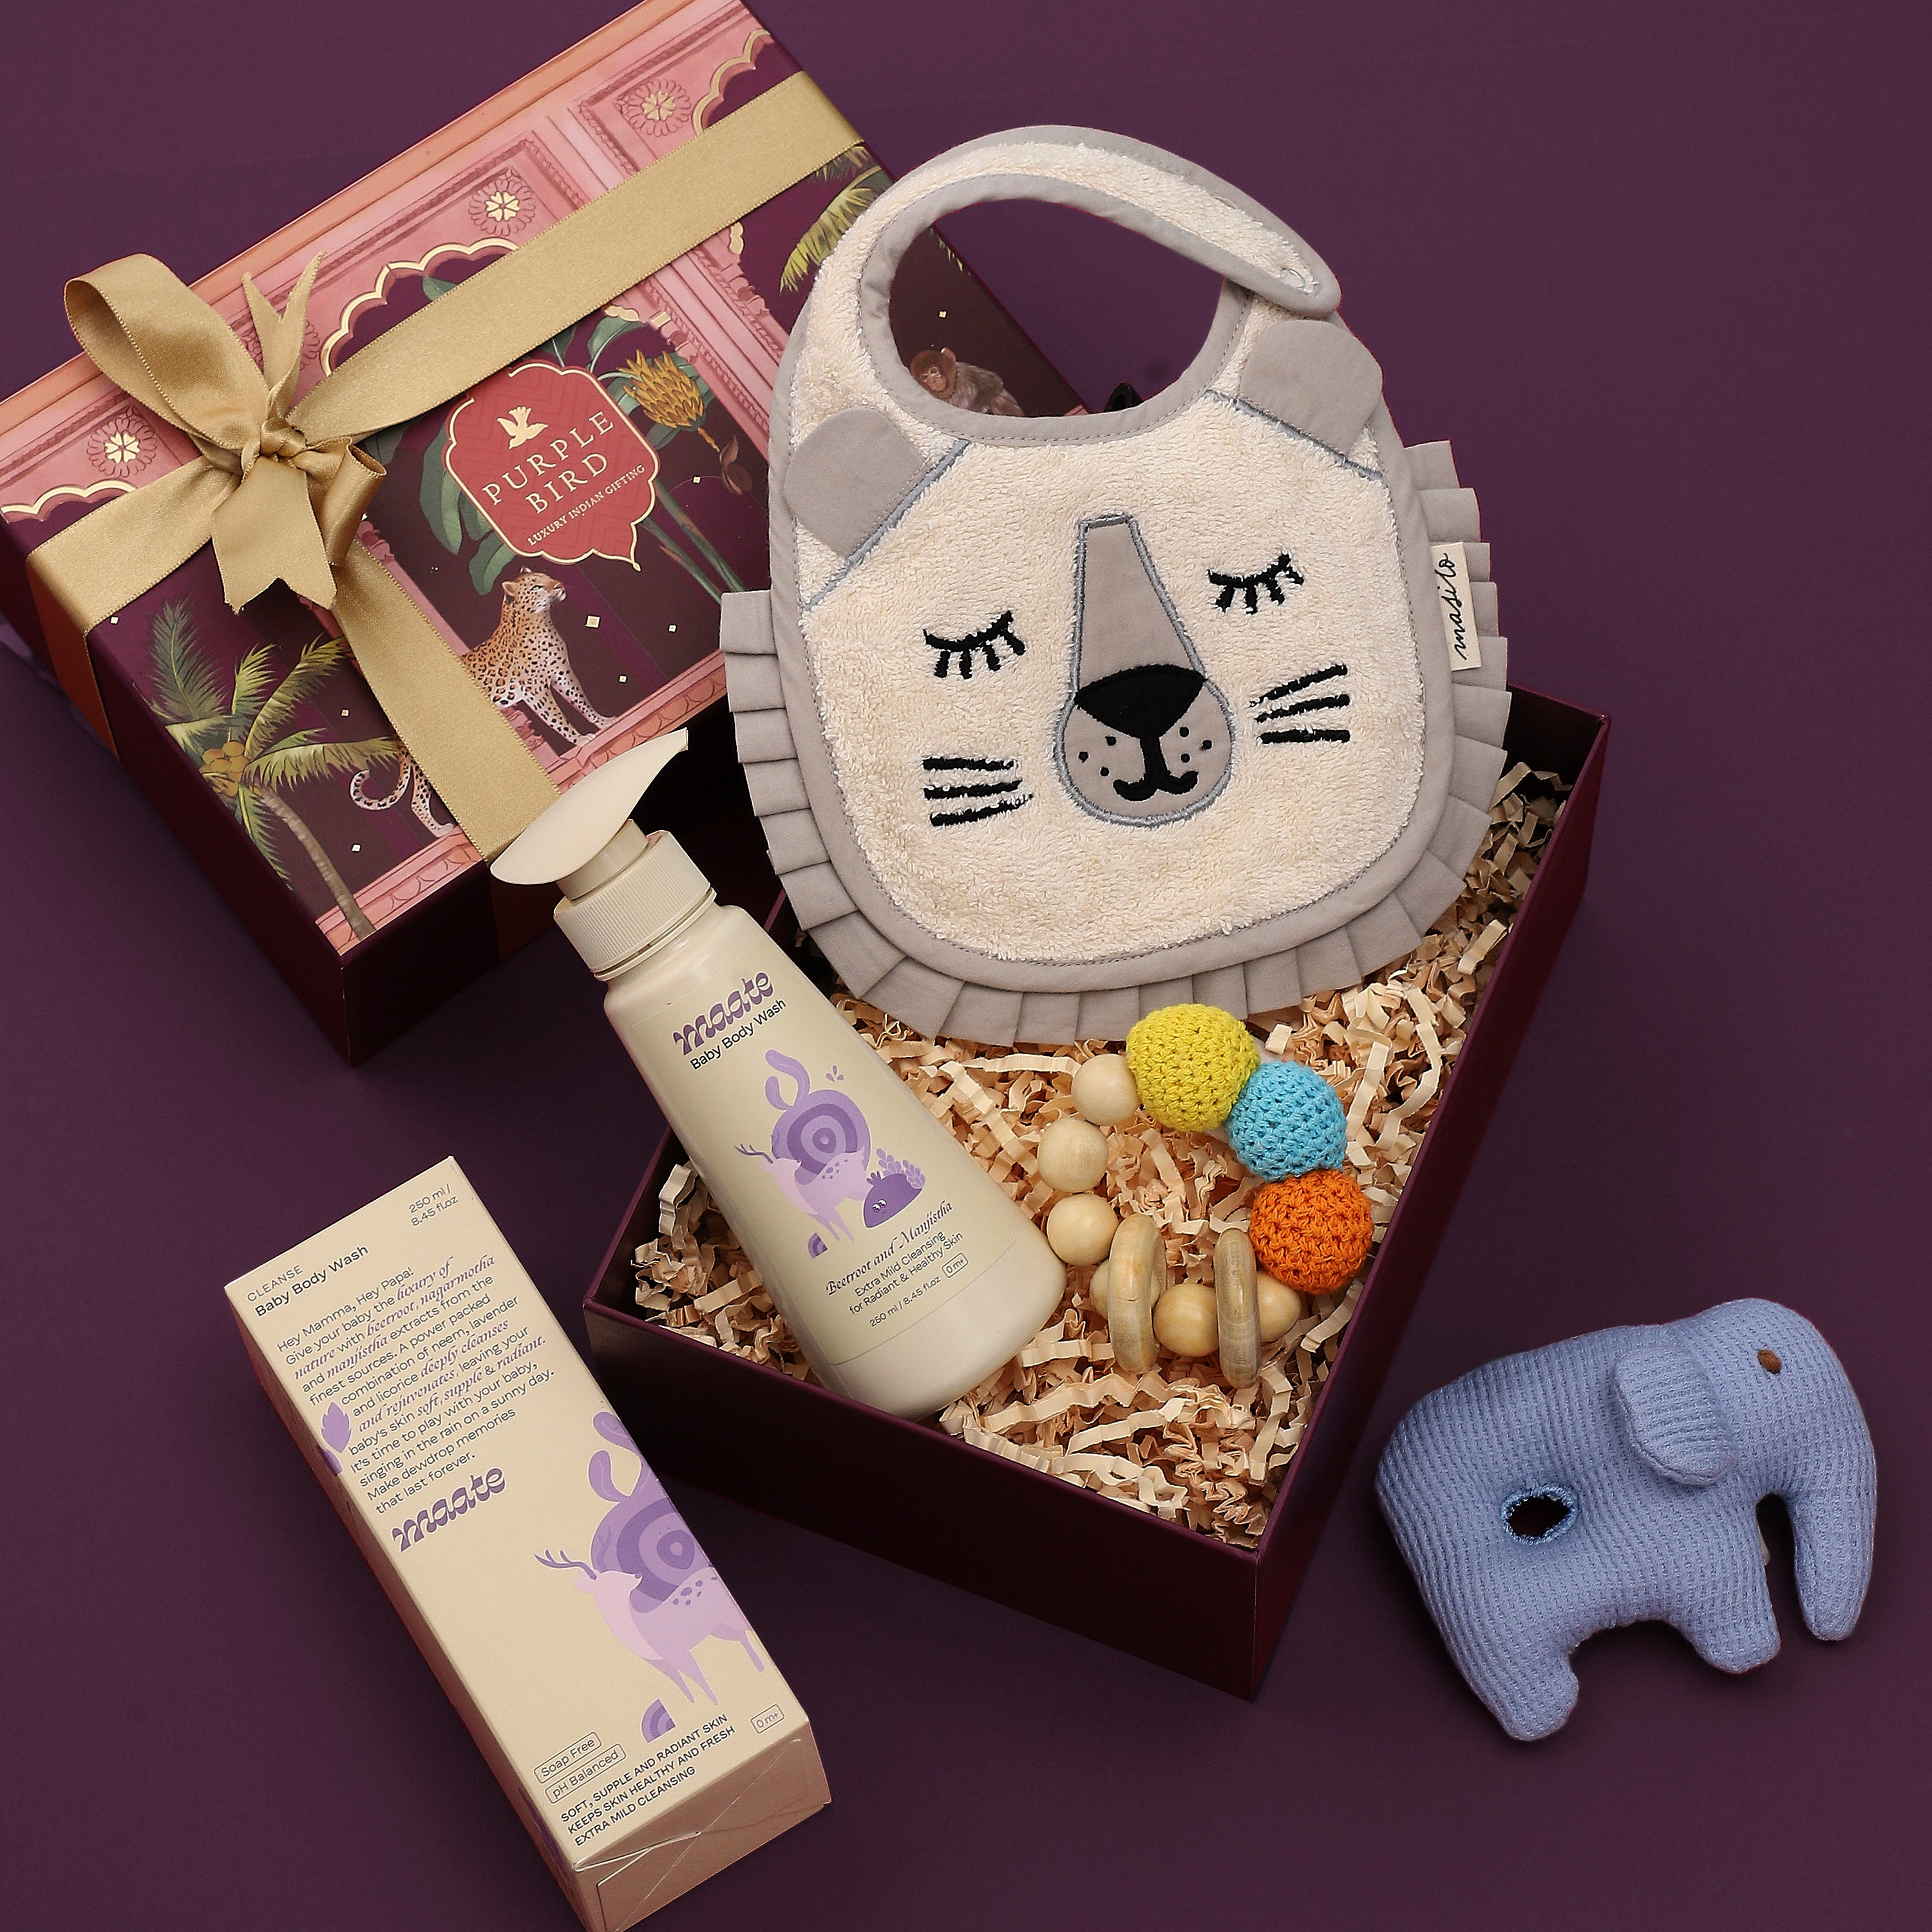 Princess Diaper Cake: Creating the Perfect Disney Baby Gift Basket -  Eclectic Momsense